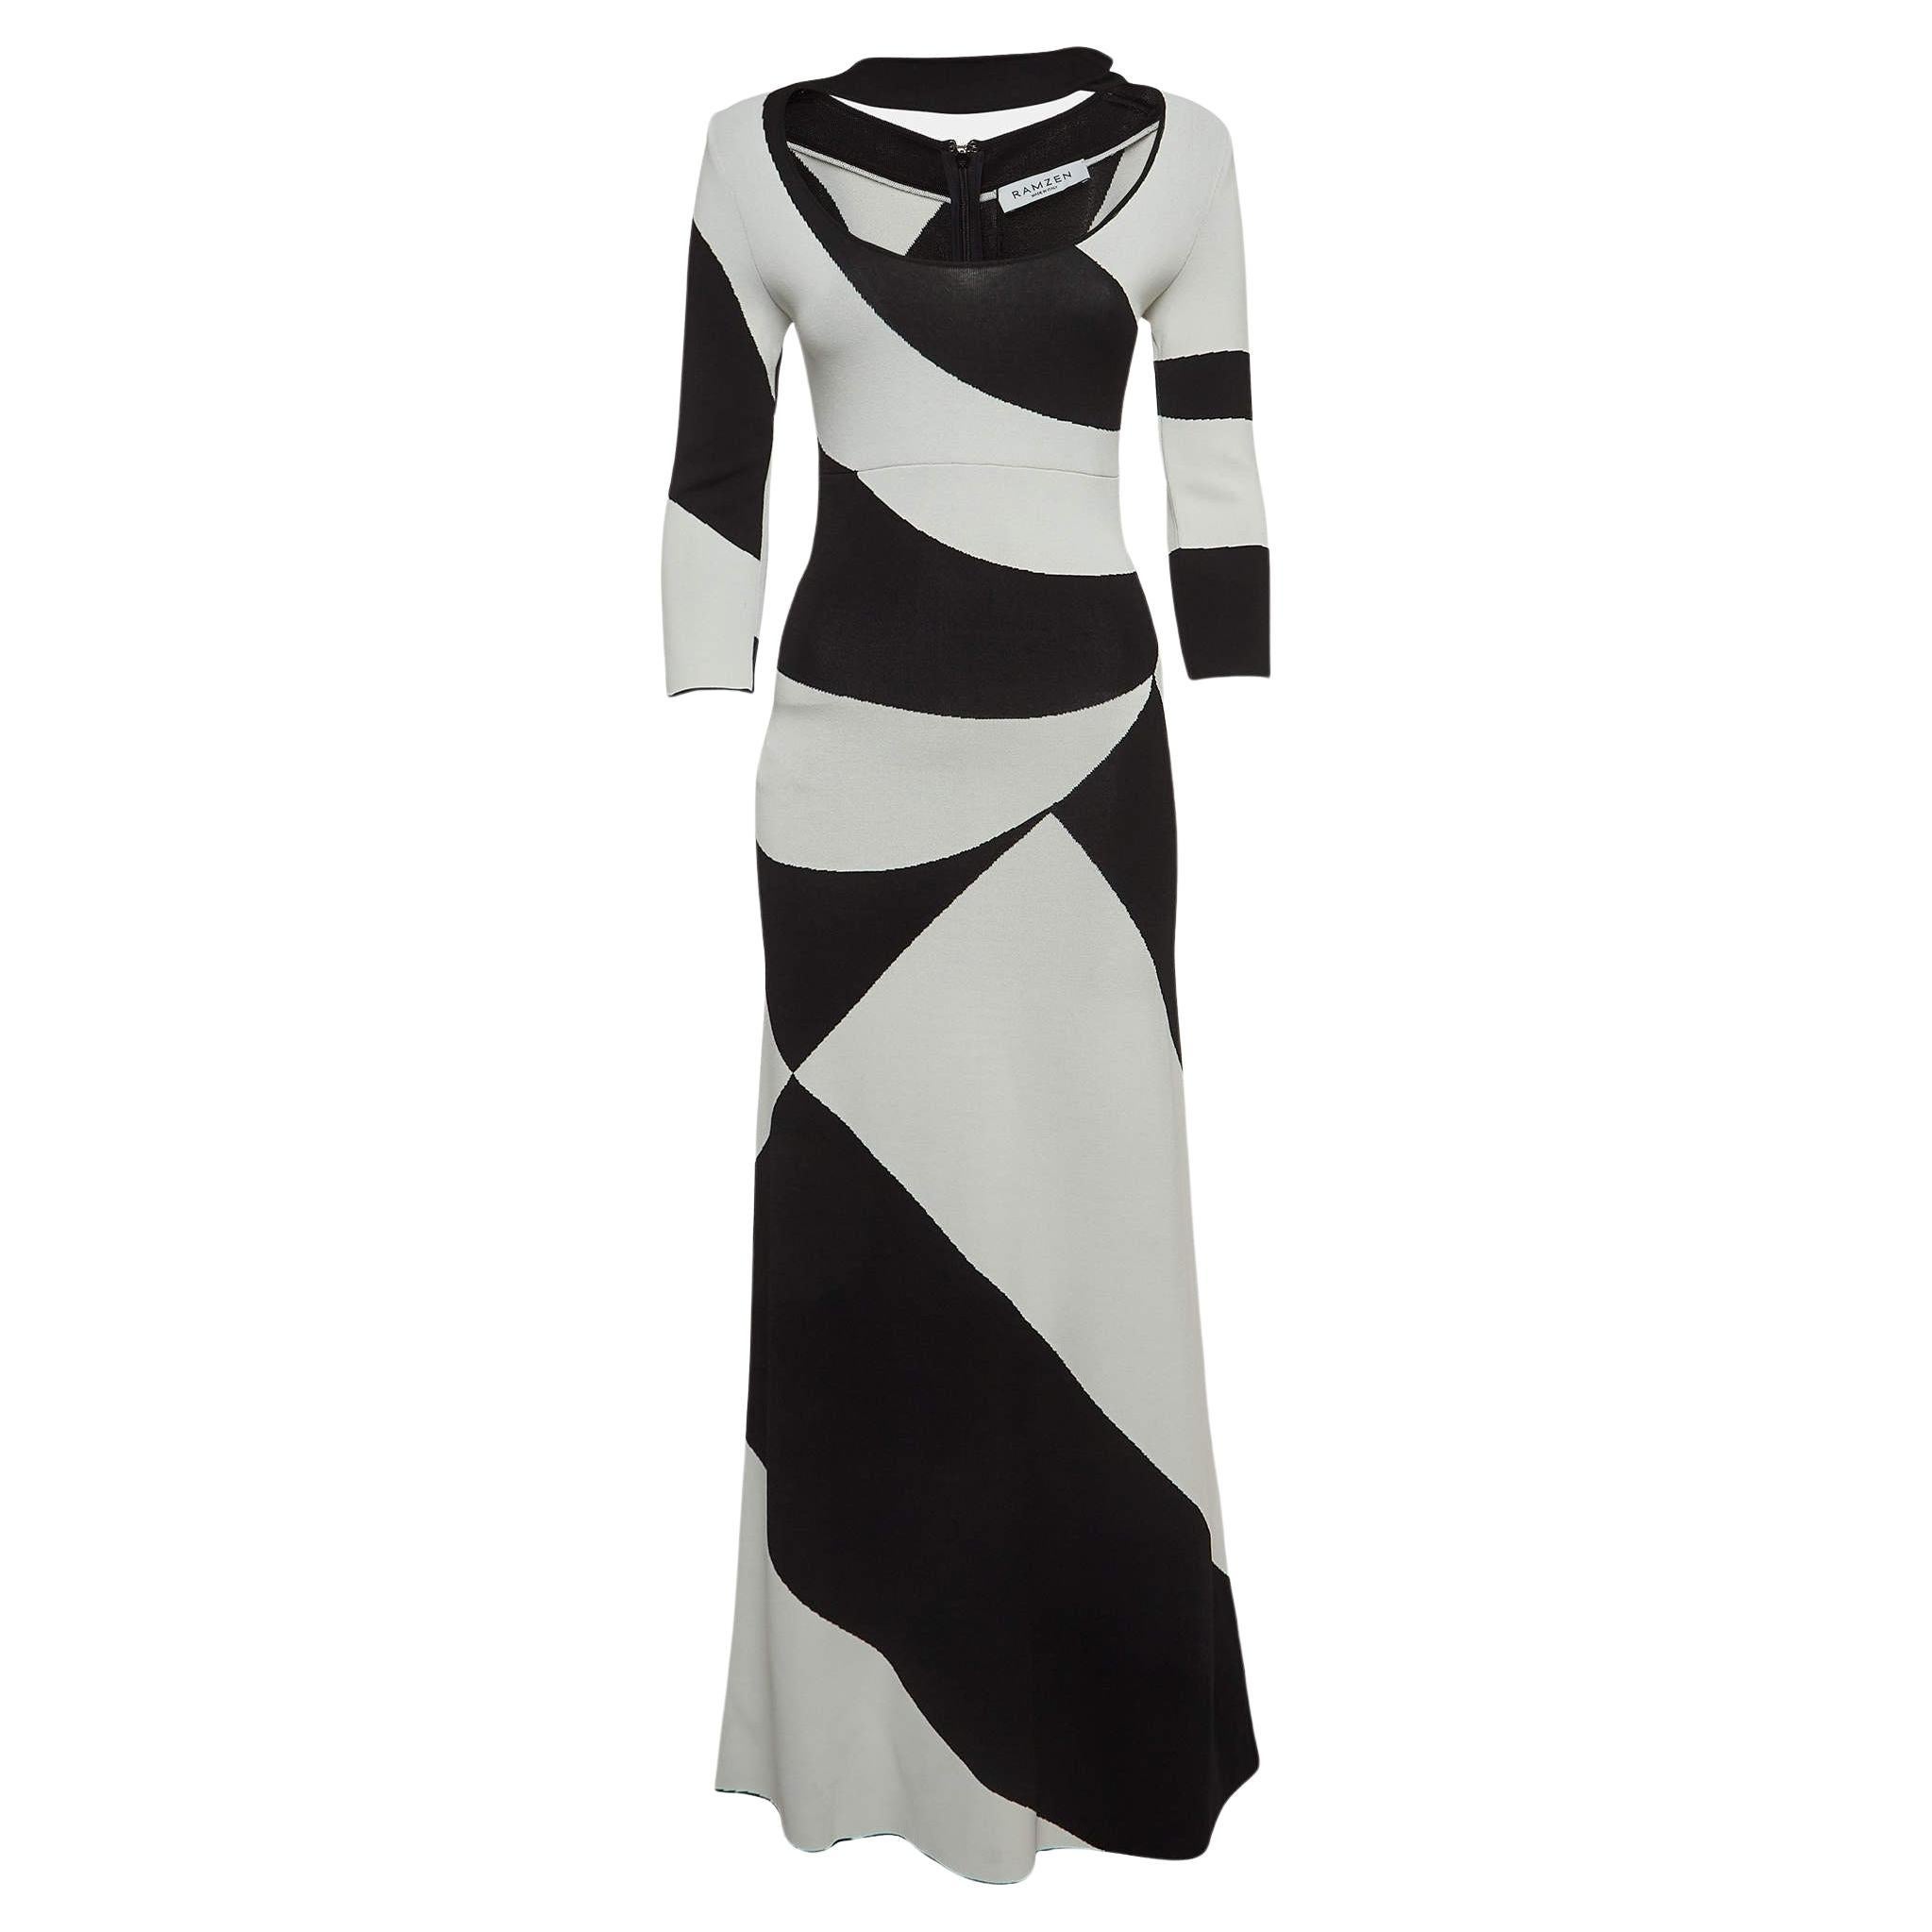 Ramzen Black/White Striped Knit Maxi Dress S For Sale